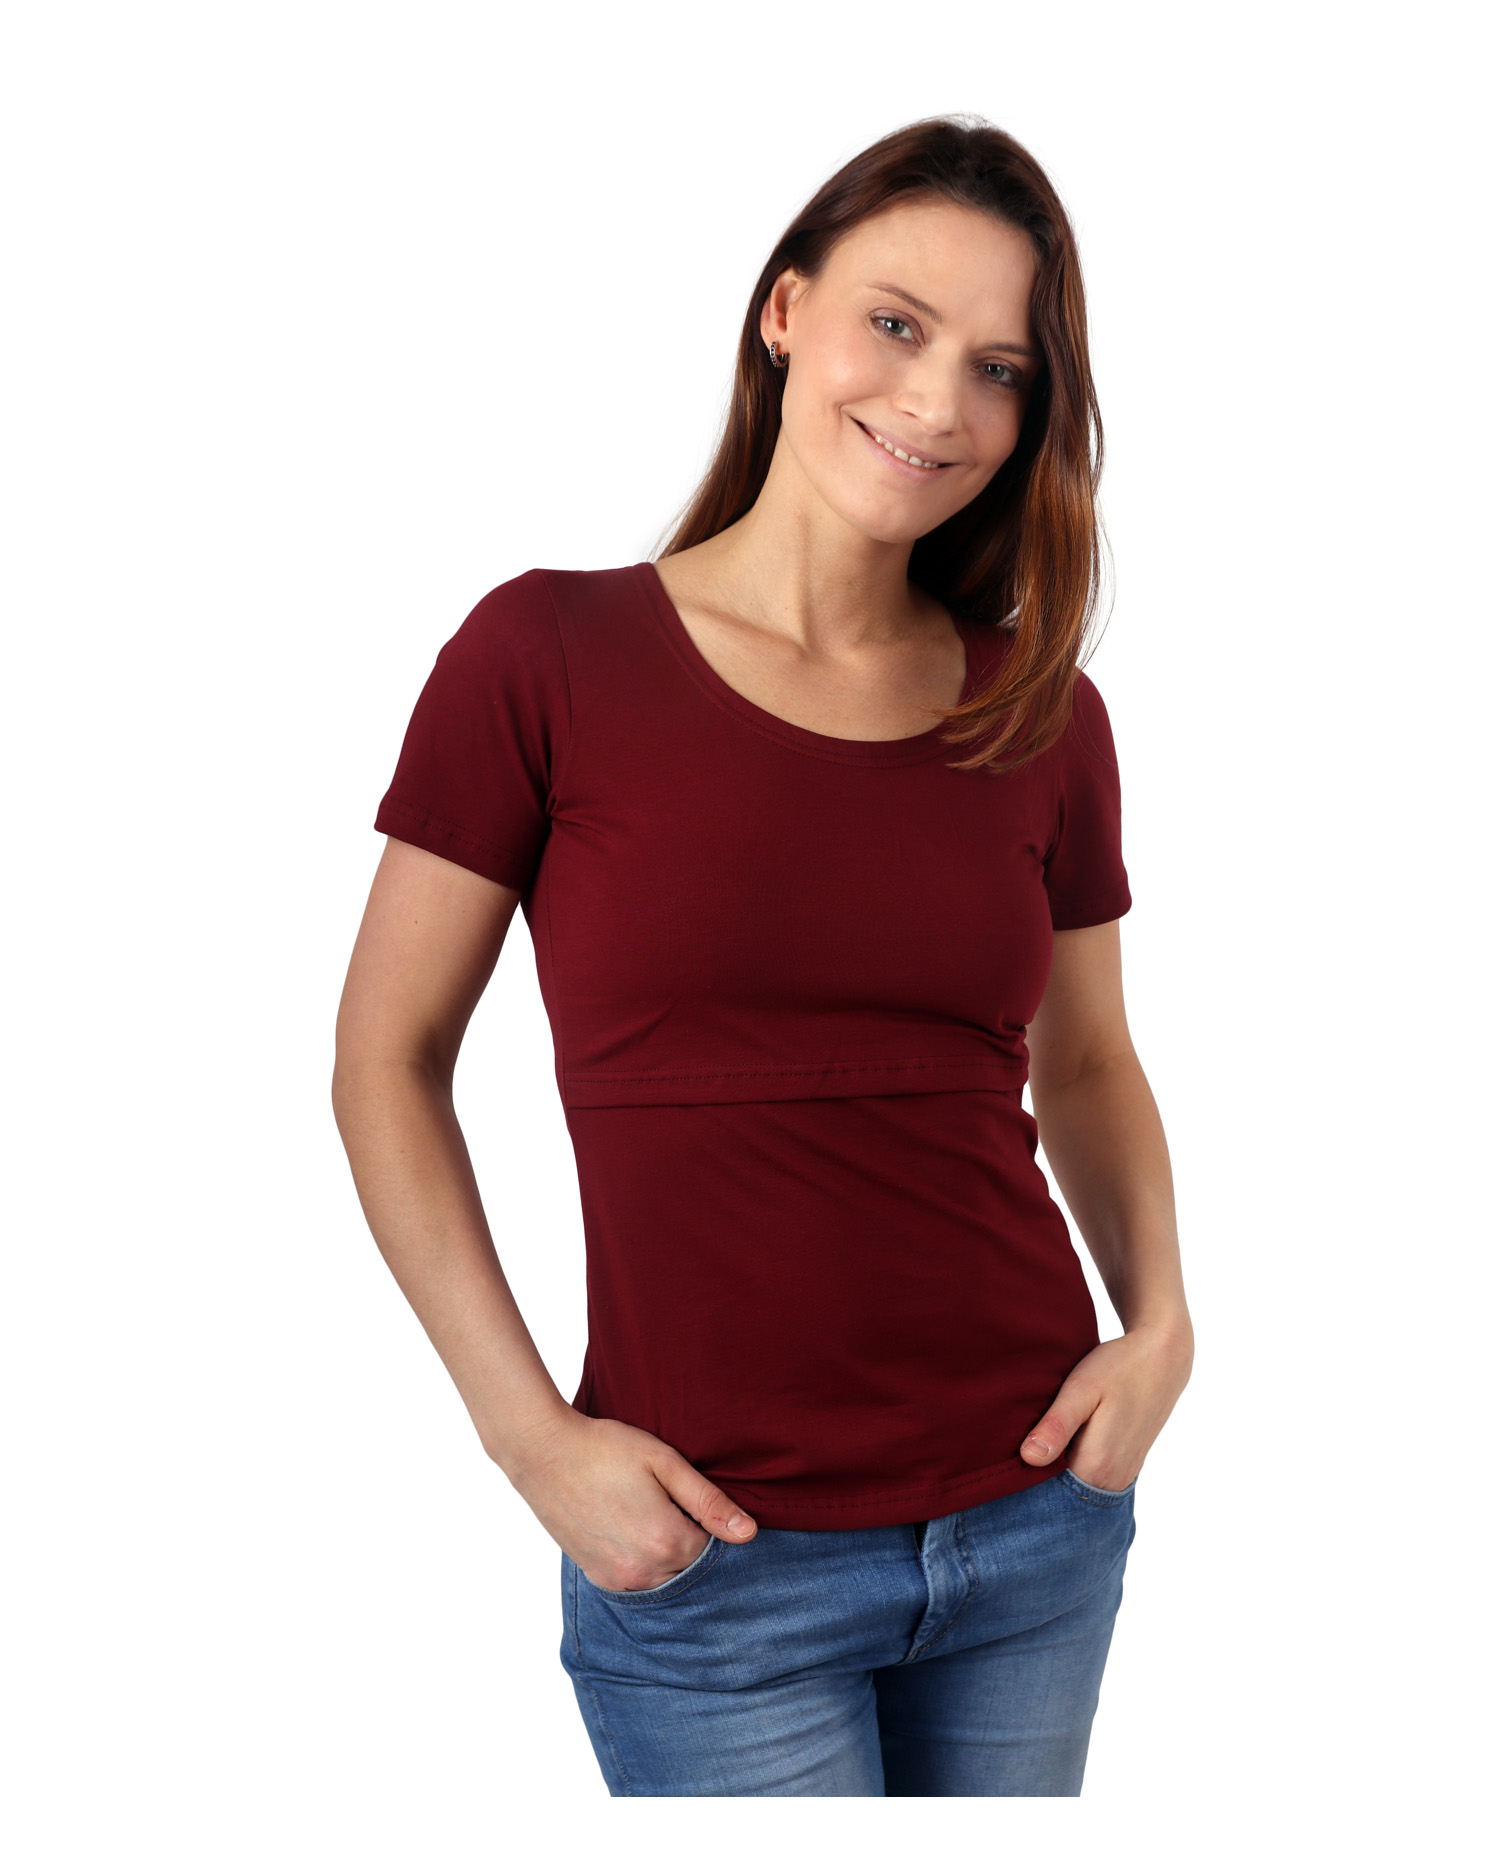 Breast-feeding T-shirt Katerina, short sleeves, wine red